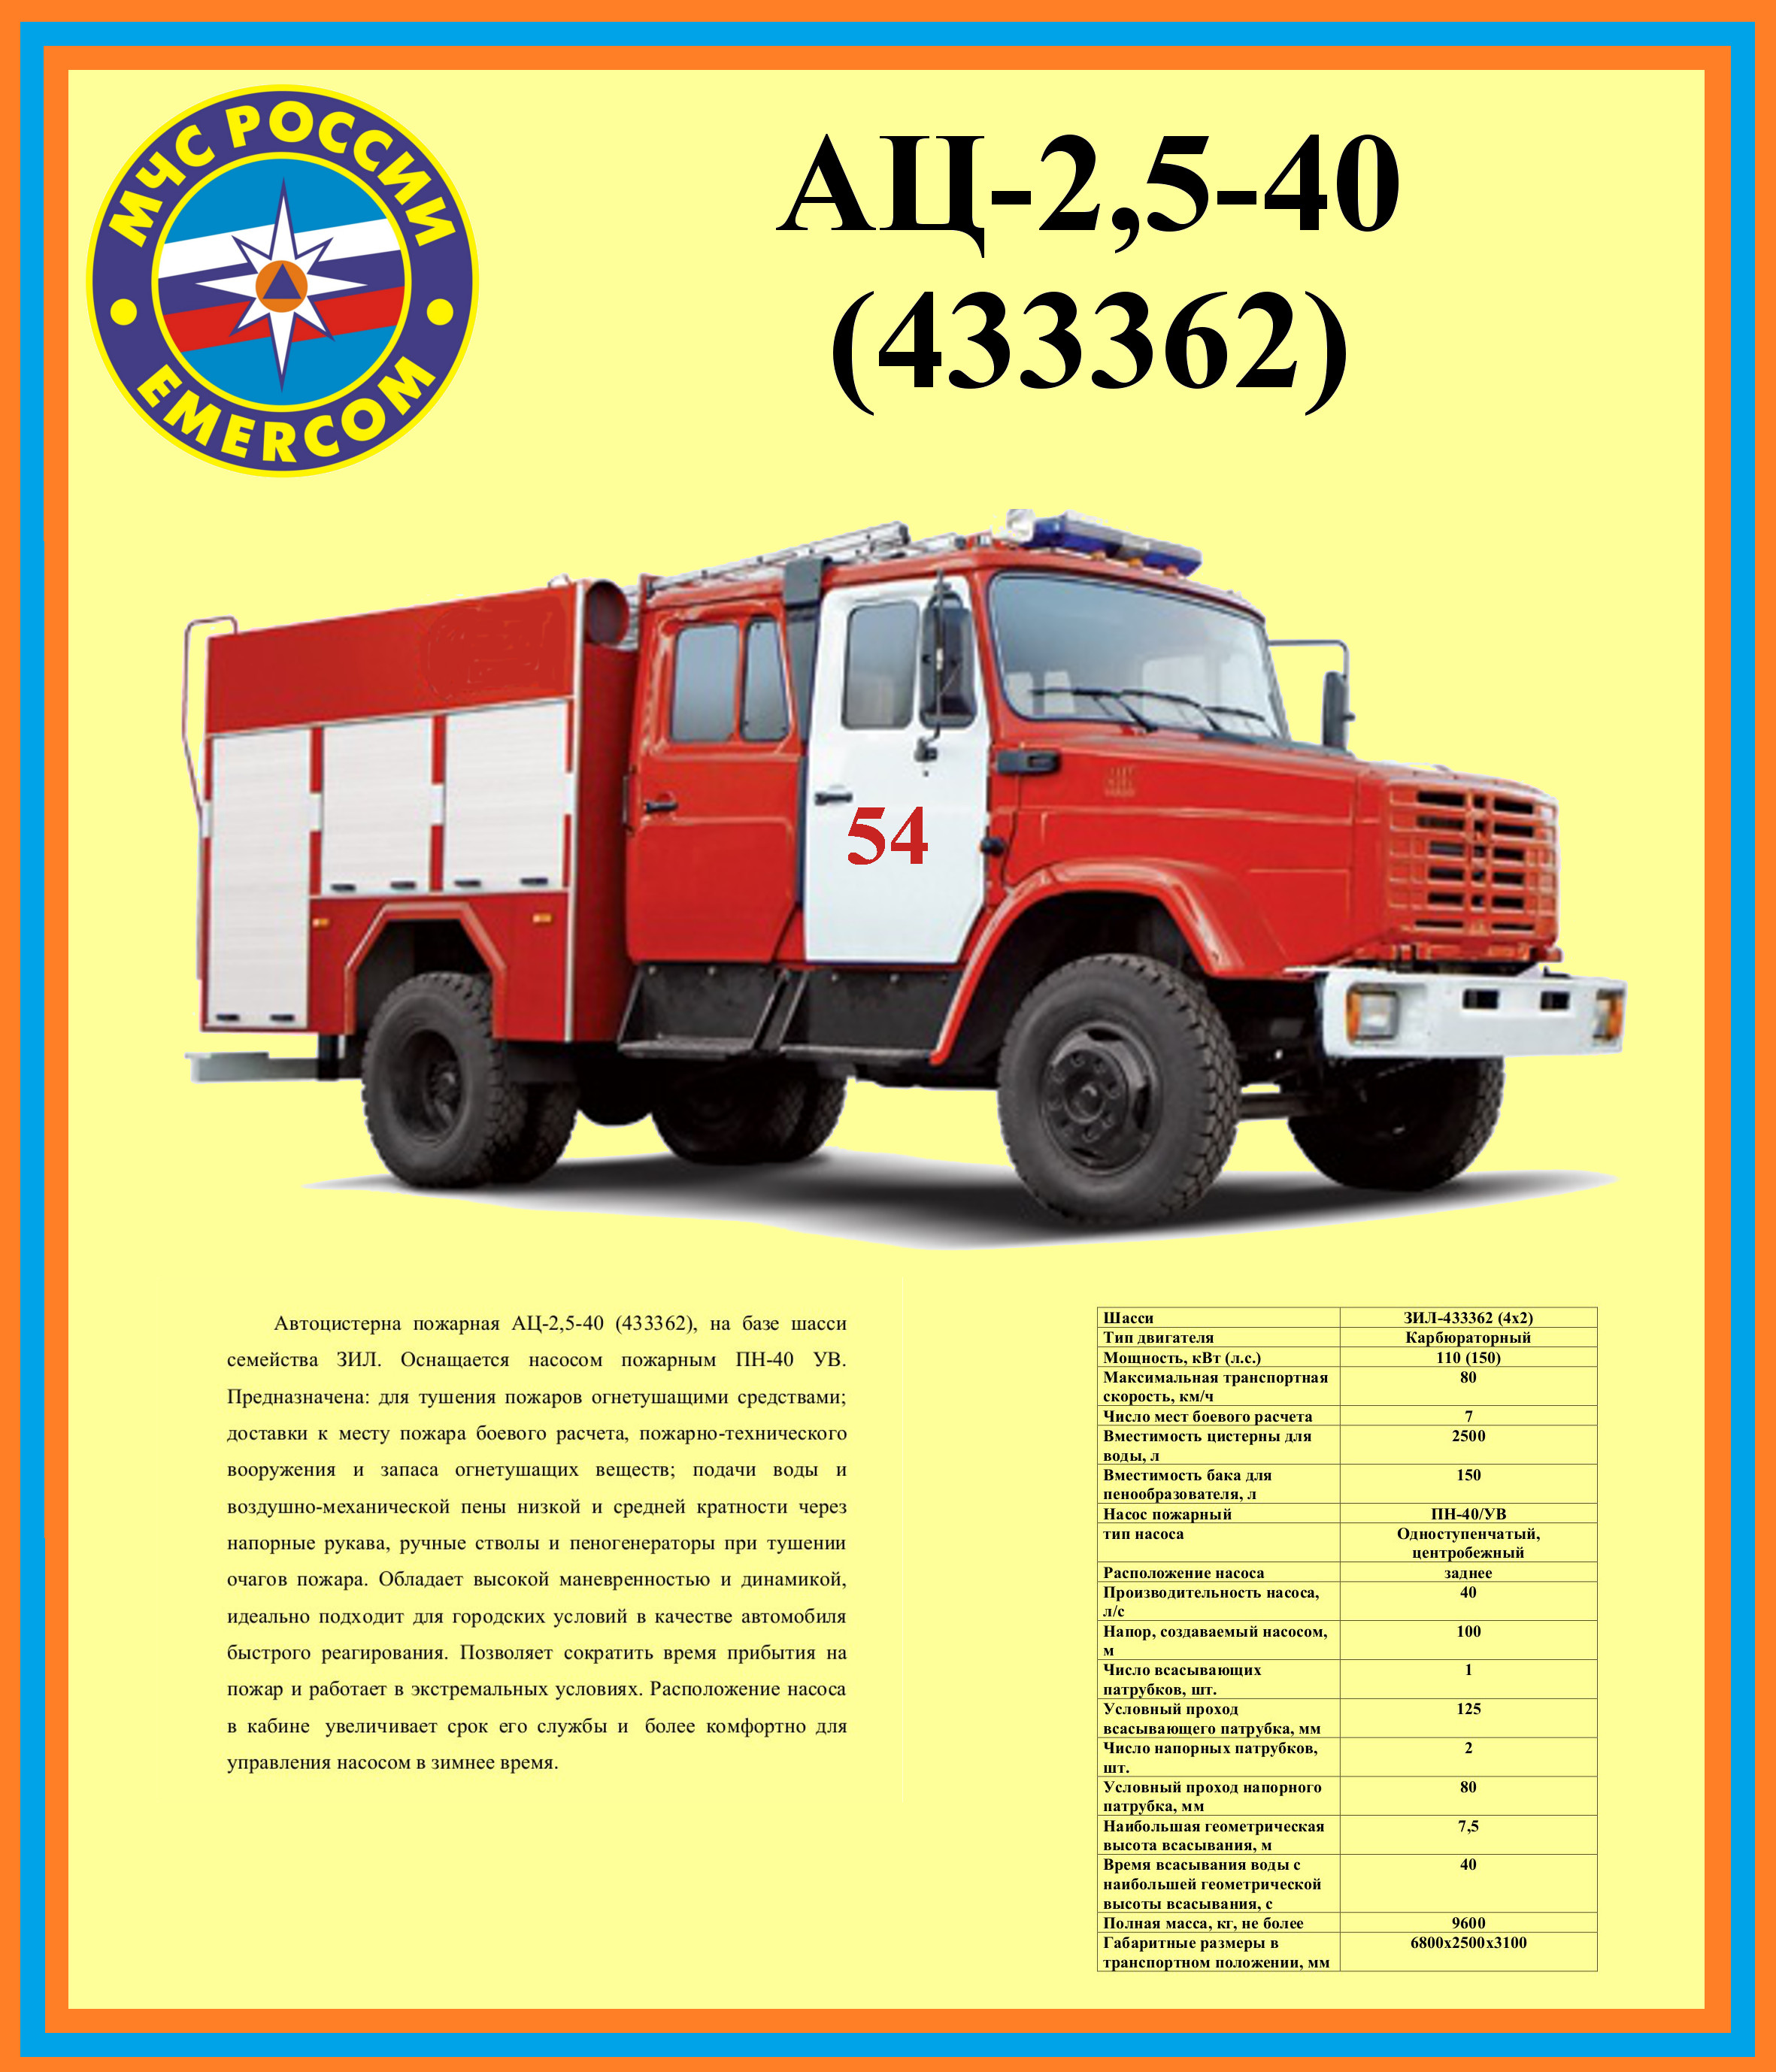 Сколько весит зил 131. ТТХ ЗИЛ 130 пожарный. ТТХ ЗИЛ 131 пожарный автомобиль АЦ. ТТХ пожарного автомобиля ЗИЛ-130 ЗИЛ-131. Пожарная машина ЗИЛ 131 технические характеристики.